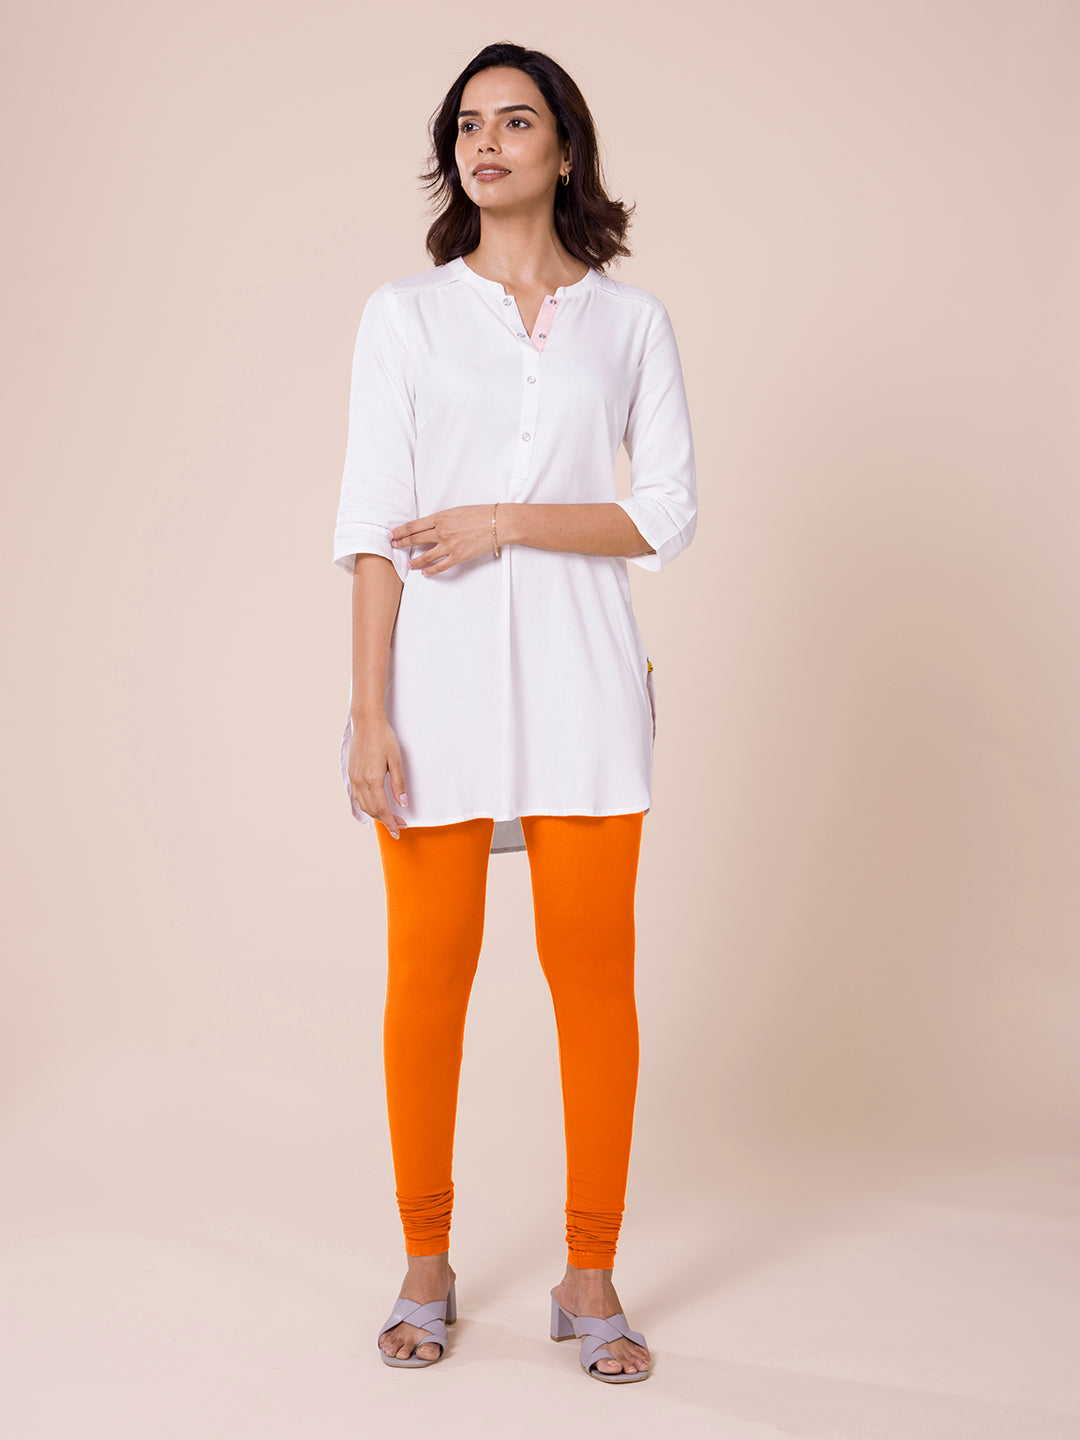 Buy Subh World Women's Cotton Lycra Churidar Leggings Combo (Pack of 5 Pink  ,Skin ,White ,Yellow ,Black) - Free Size at Amazon.in